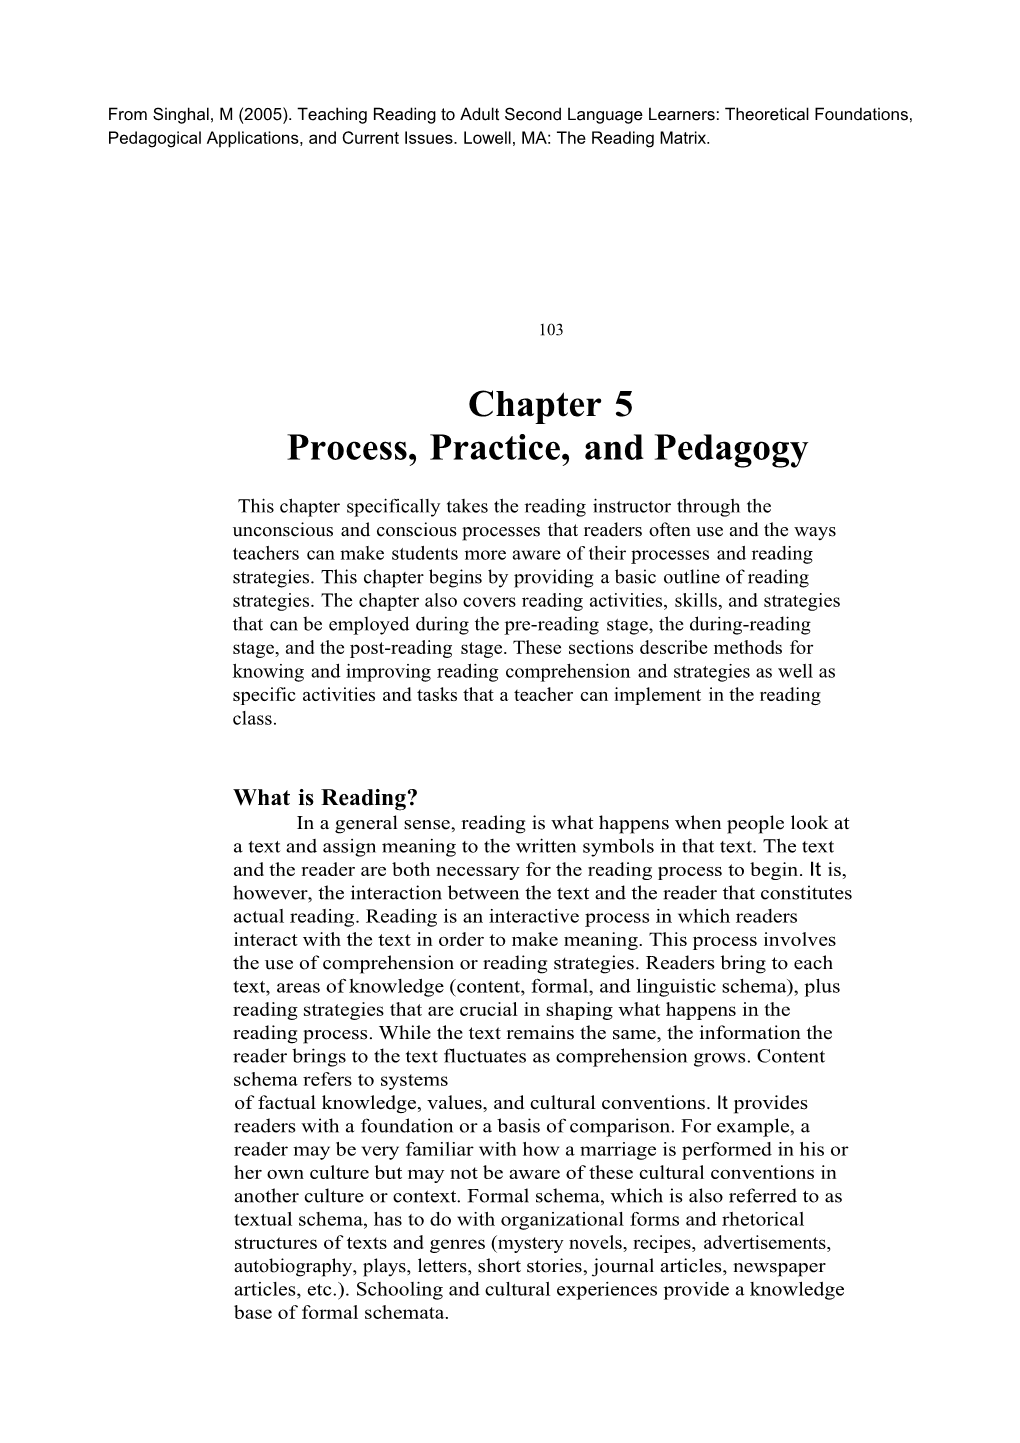 Process Practice and Pedagogy